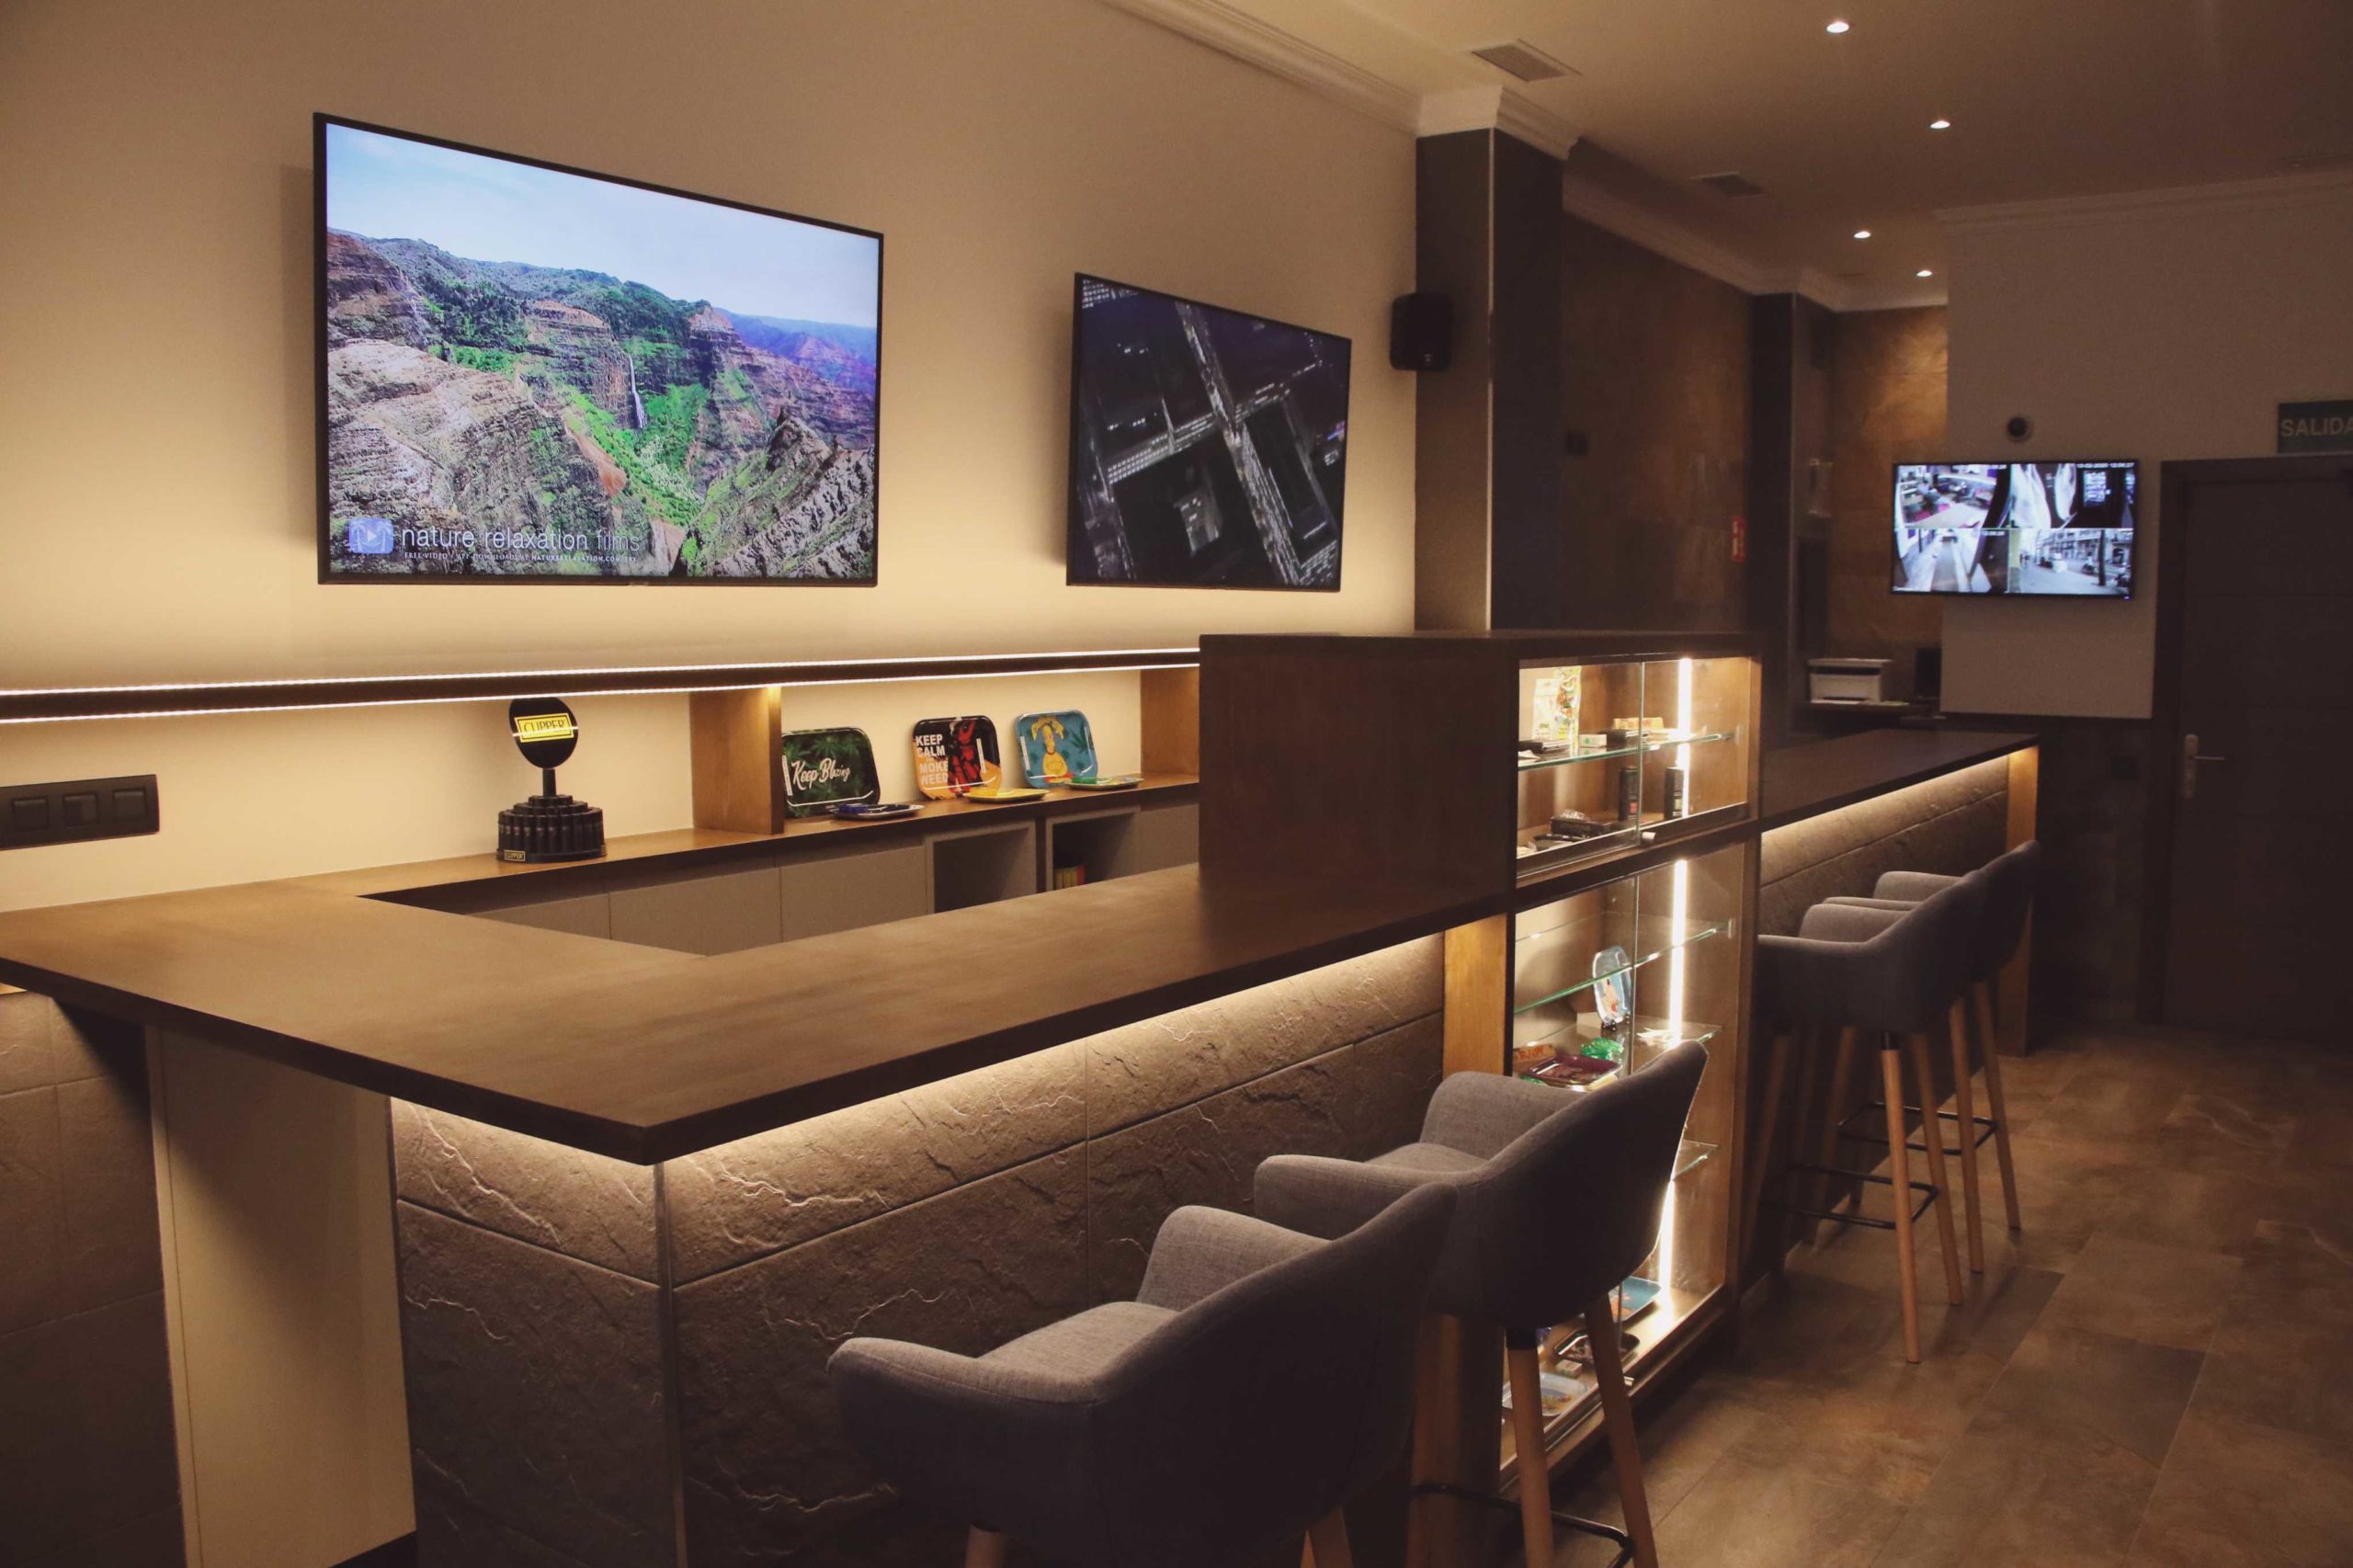 barcelona coffeeshop bar with screens on the wall